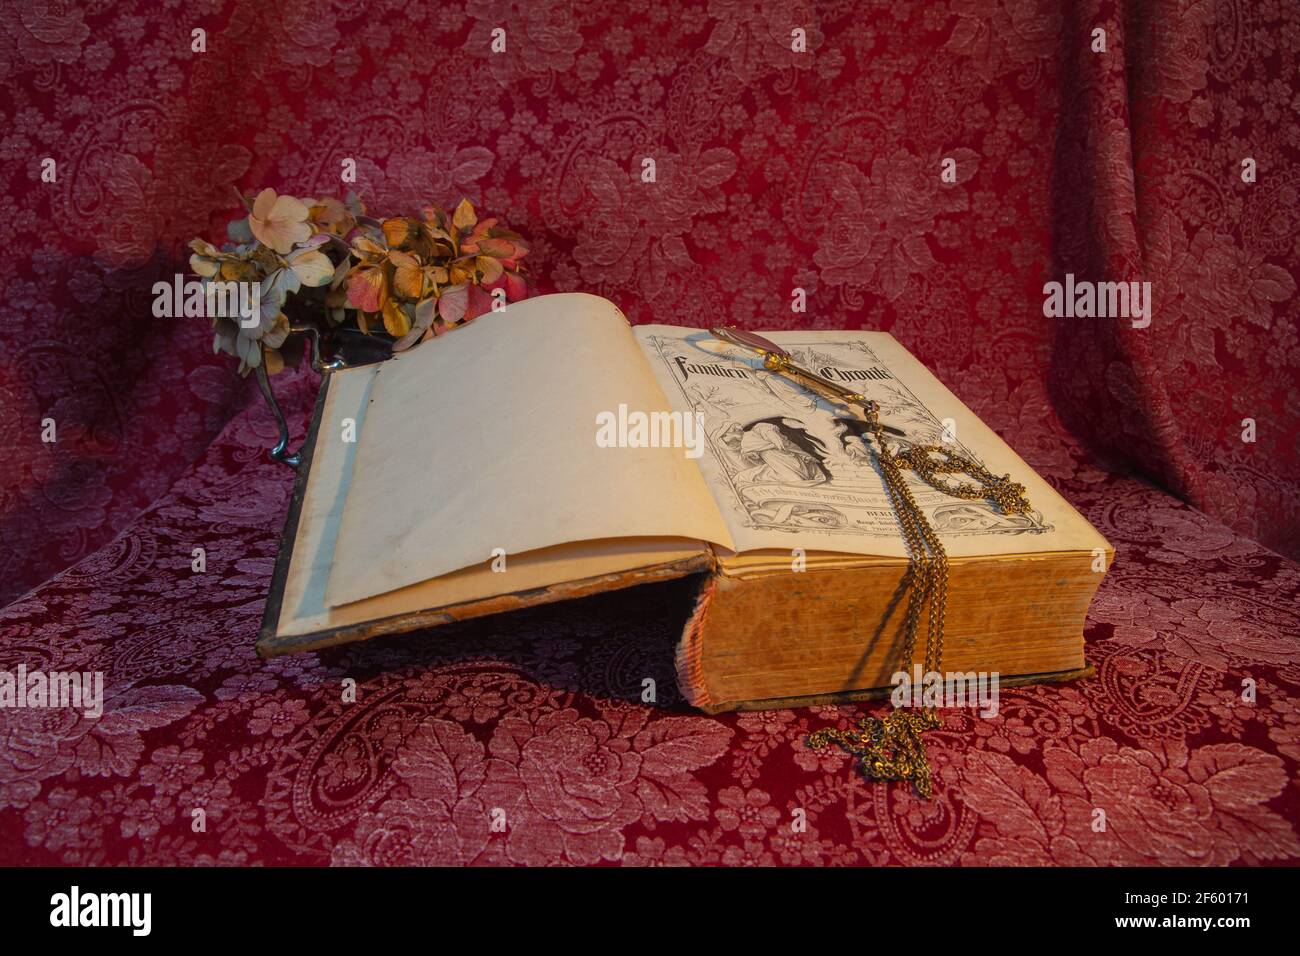 Libro, libro vecchio, primo piano, vita morta, Nahaufnahme, Detailaufnahme, Dateil shot, arangement, Kerzenhatter, fiore selvatico, Fiore, Stilleben Foto Stock